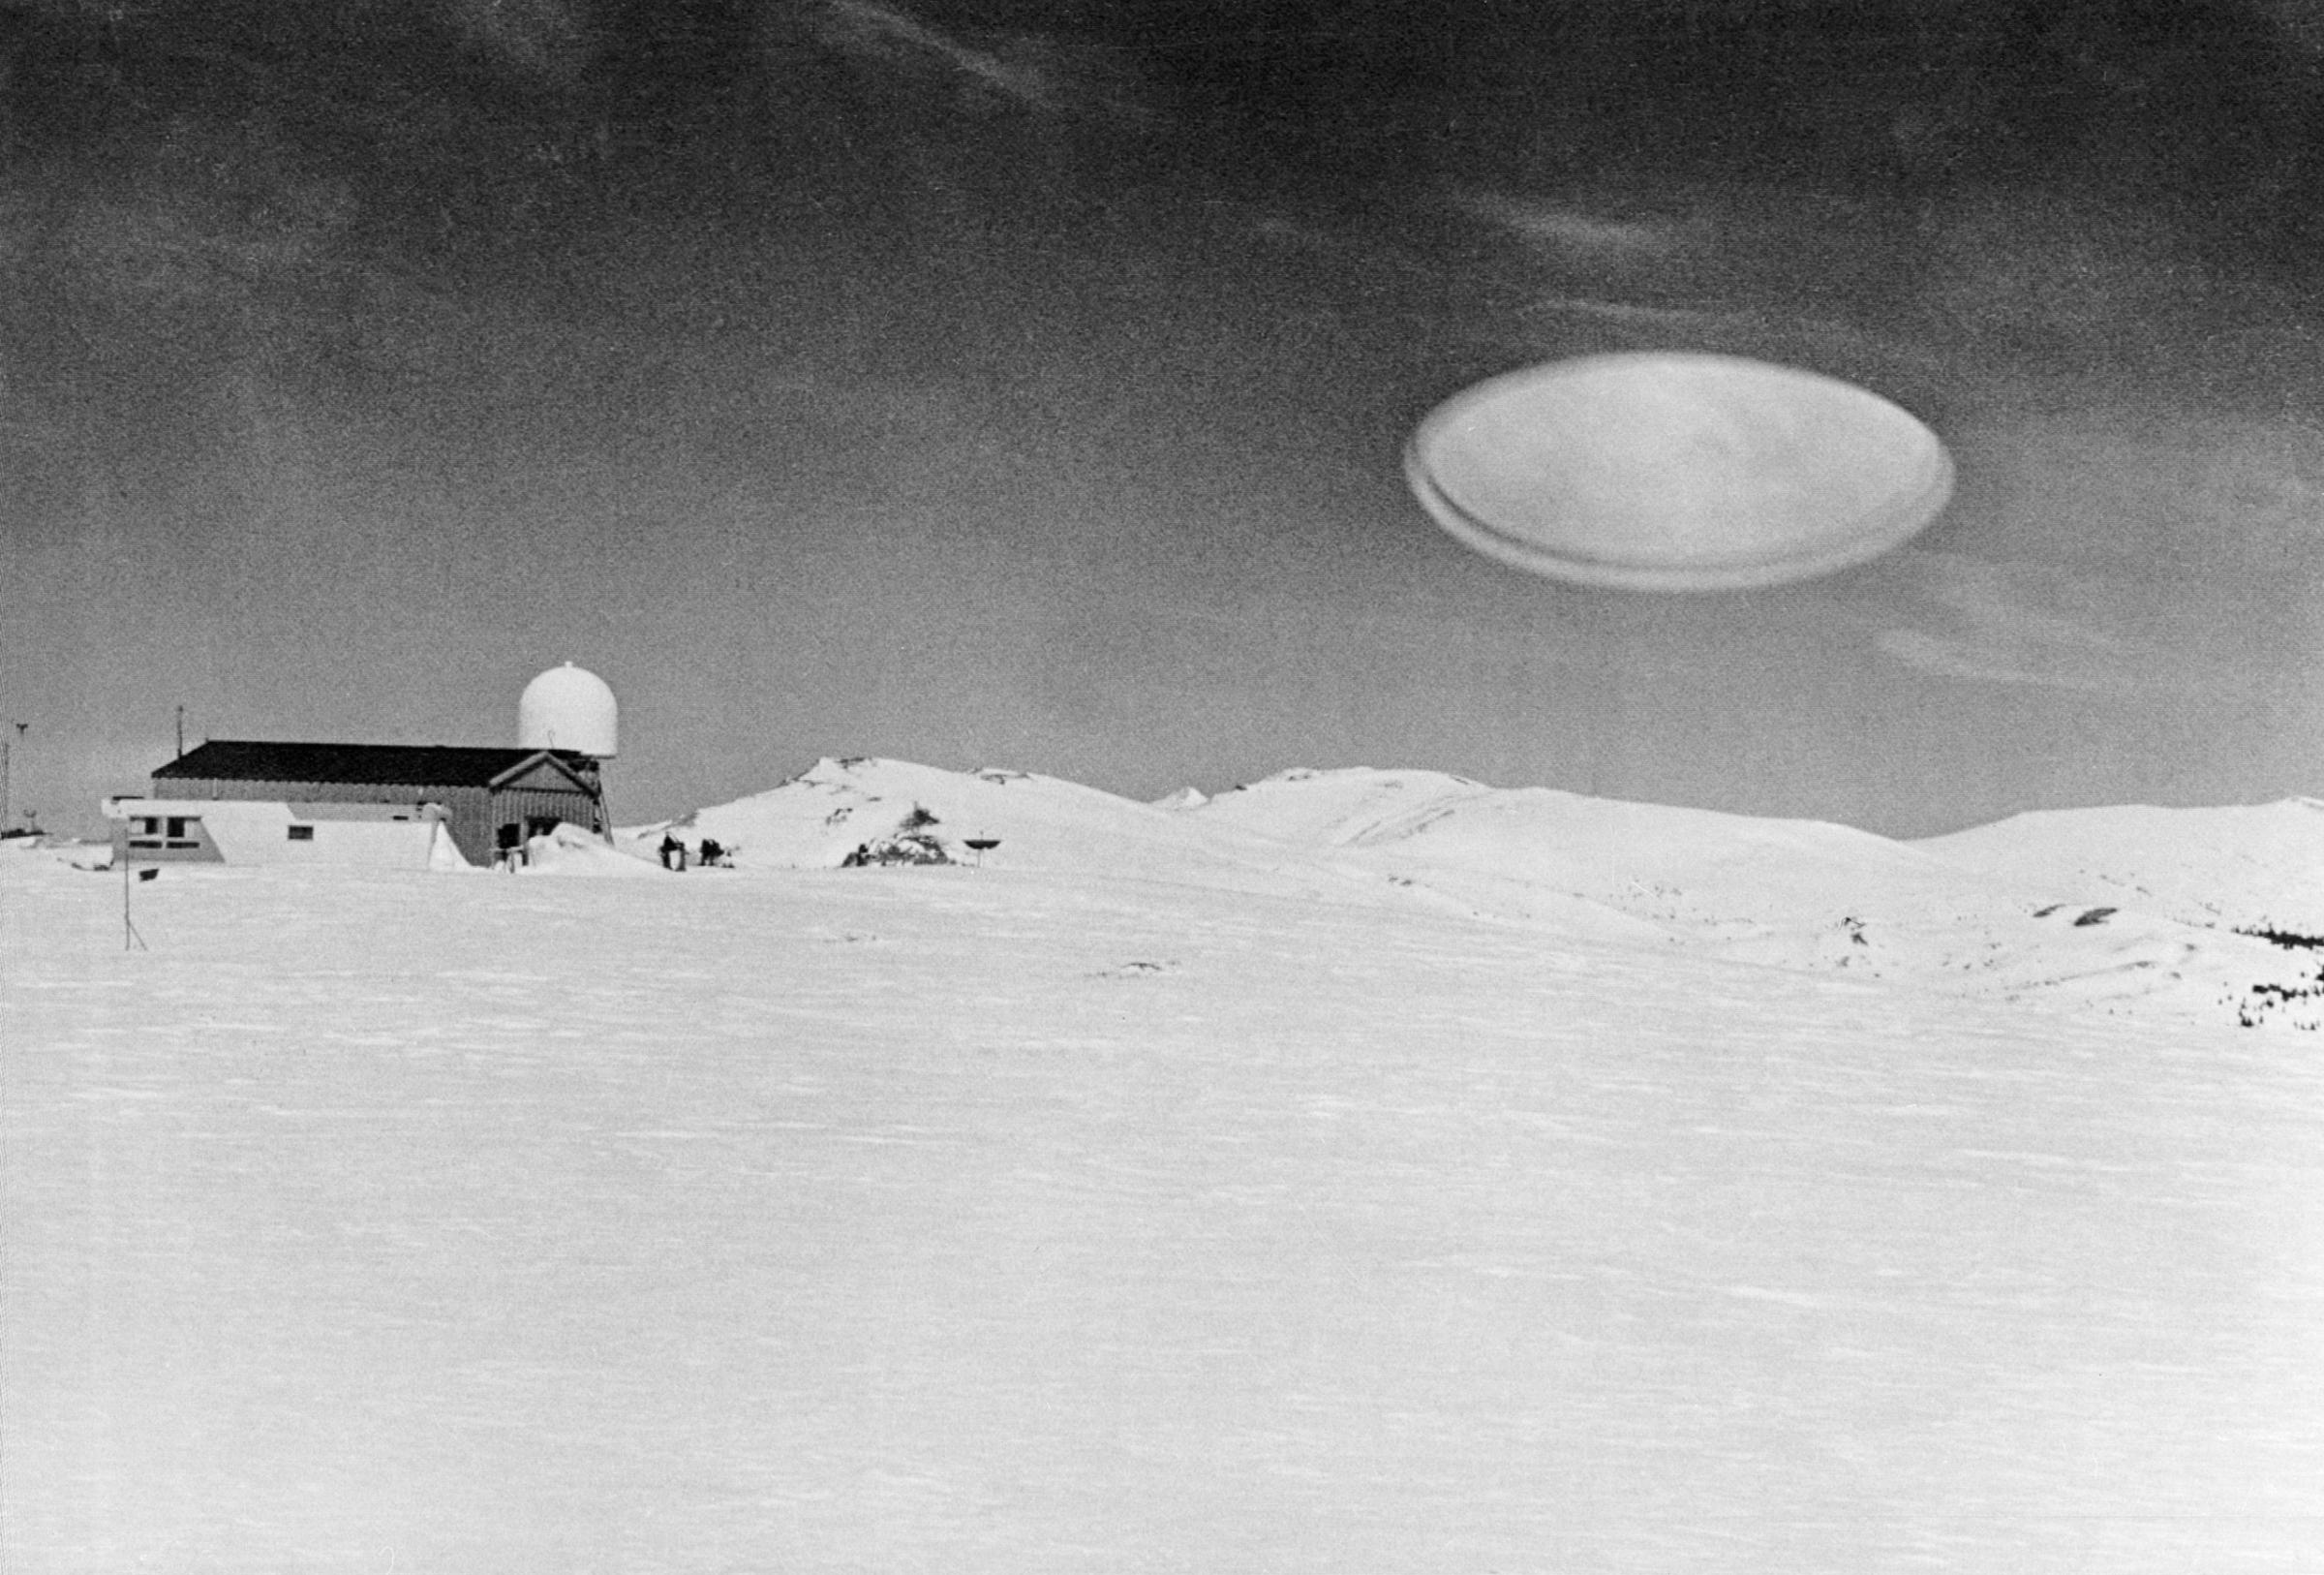 UFO Over Barn In Snow Covered Field, 1966 Colorado